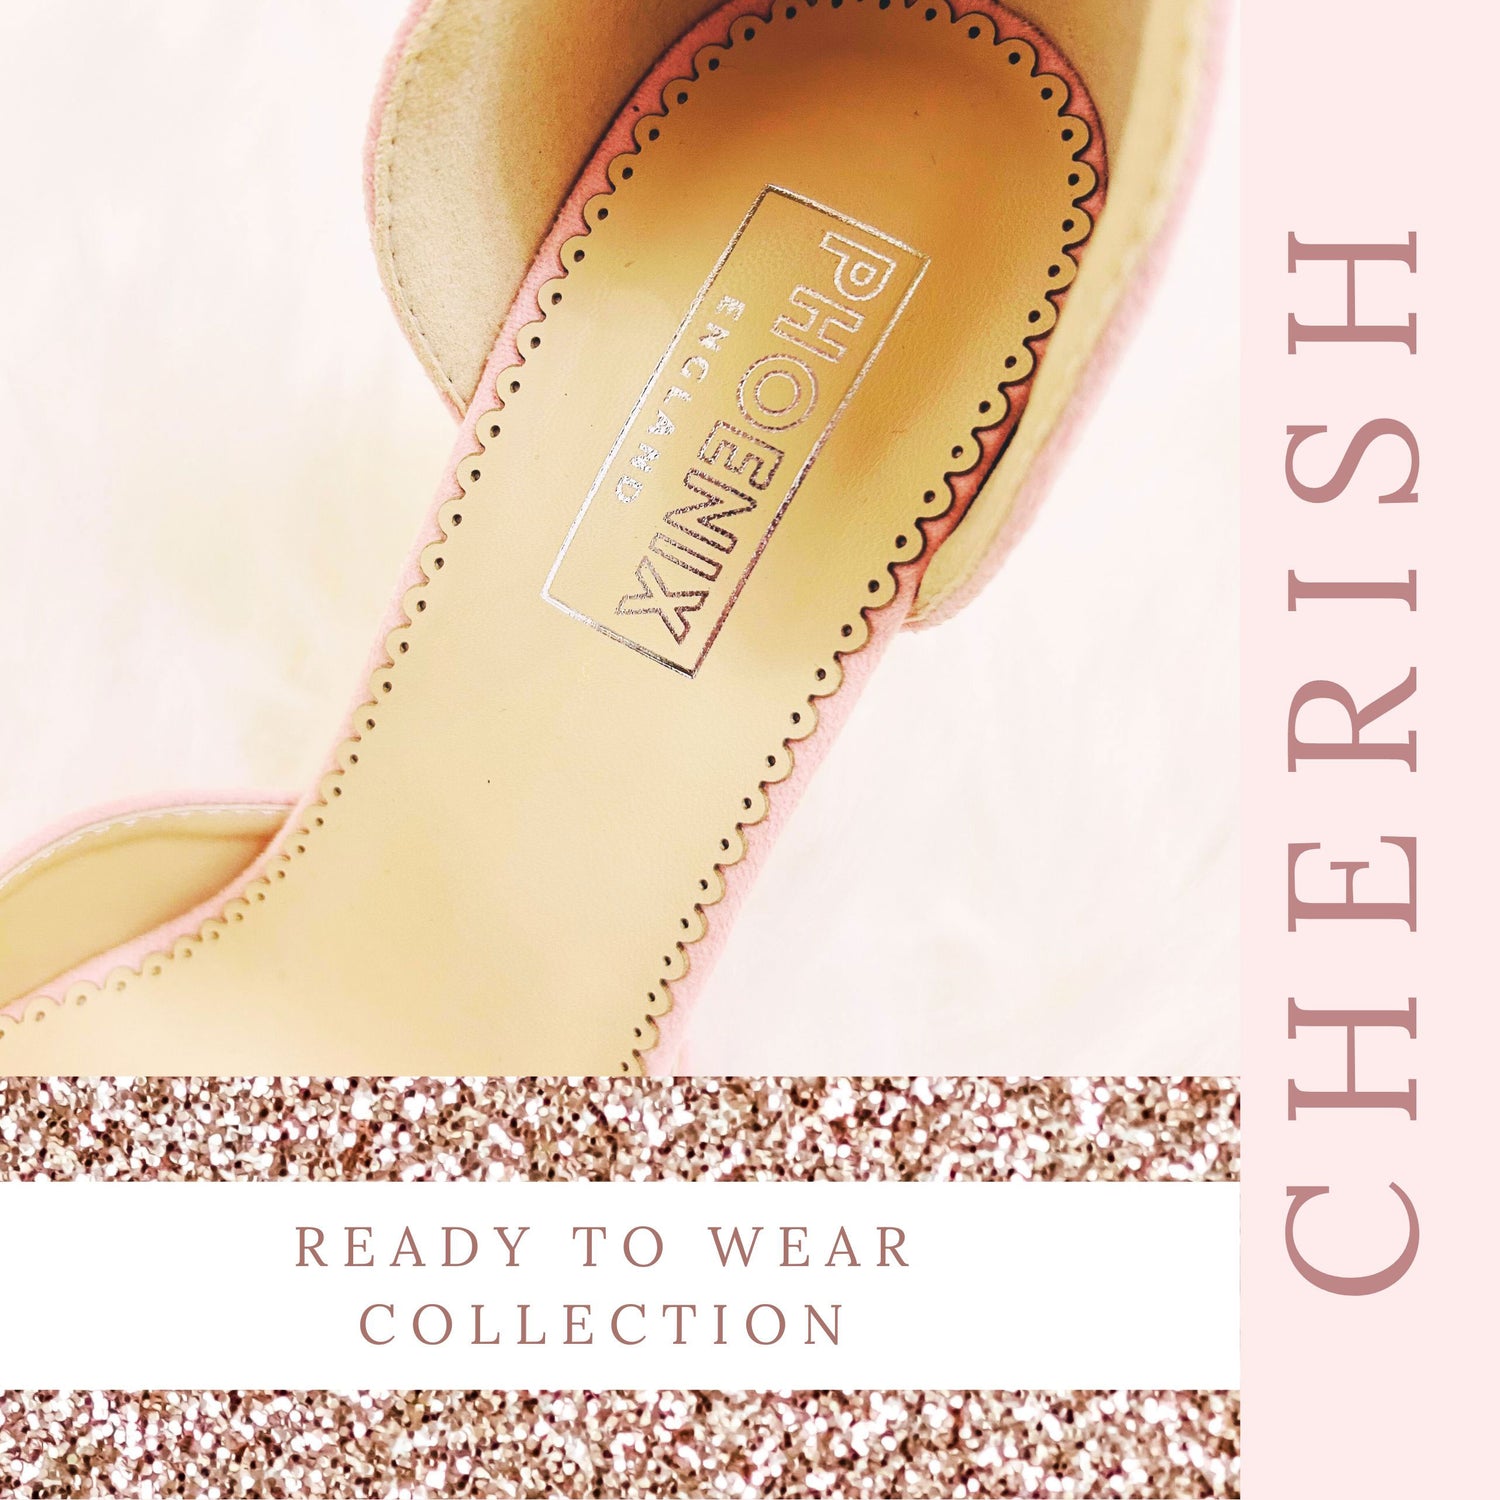 blush-sandals-for-wedding